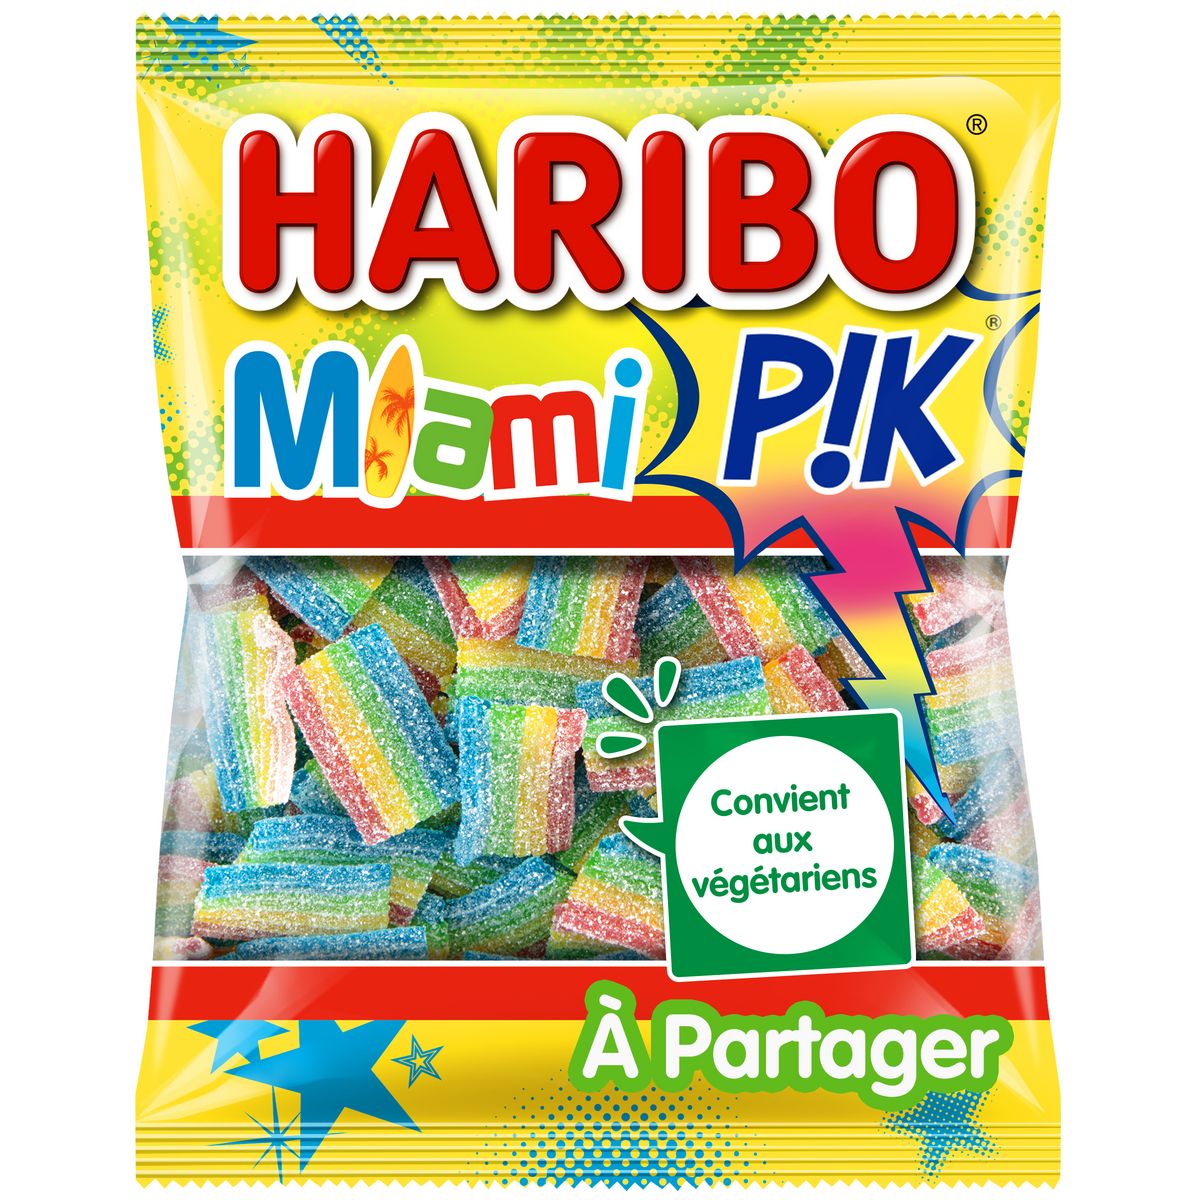 Haribo Miami PIK Tangy Bag Candy 200g